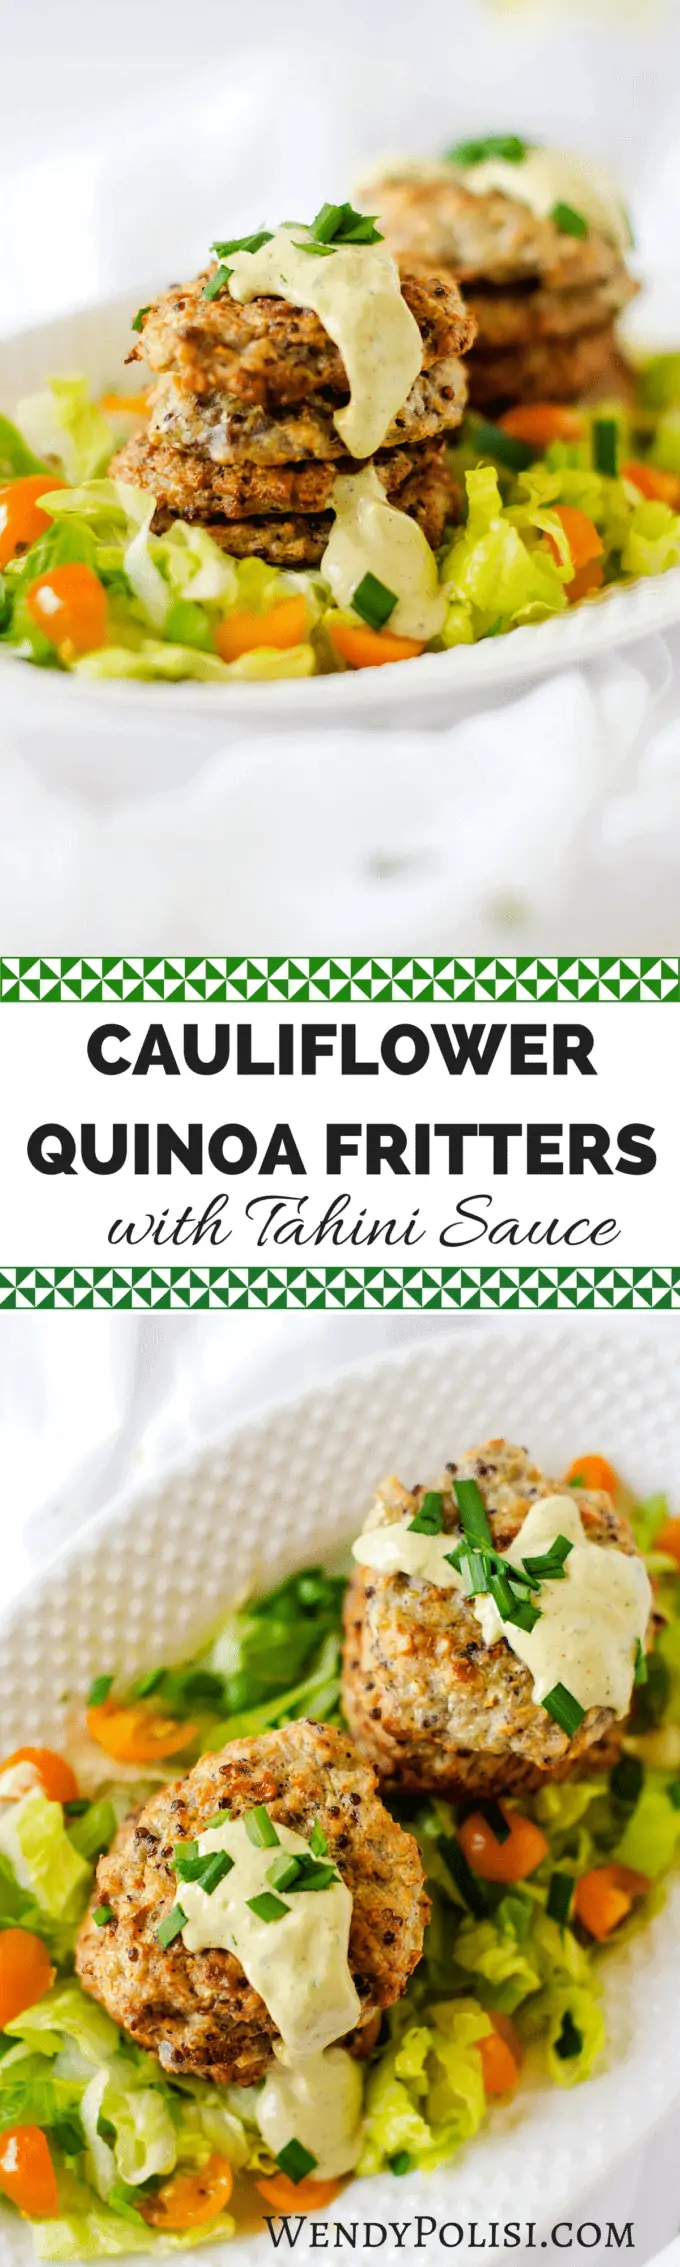 Cauliflower Quinoa Fritters with Chive Tahini Sauce - Wendy Polisi.com